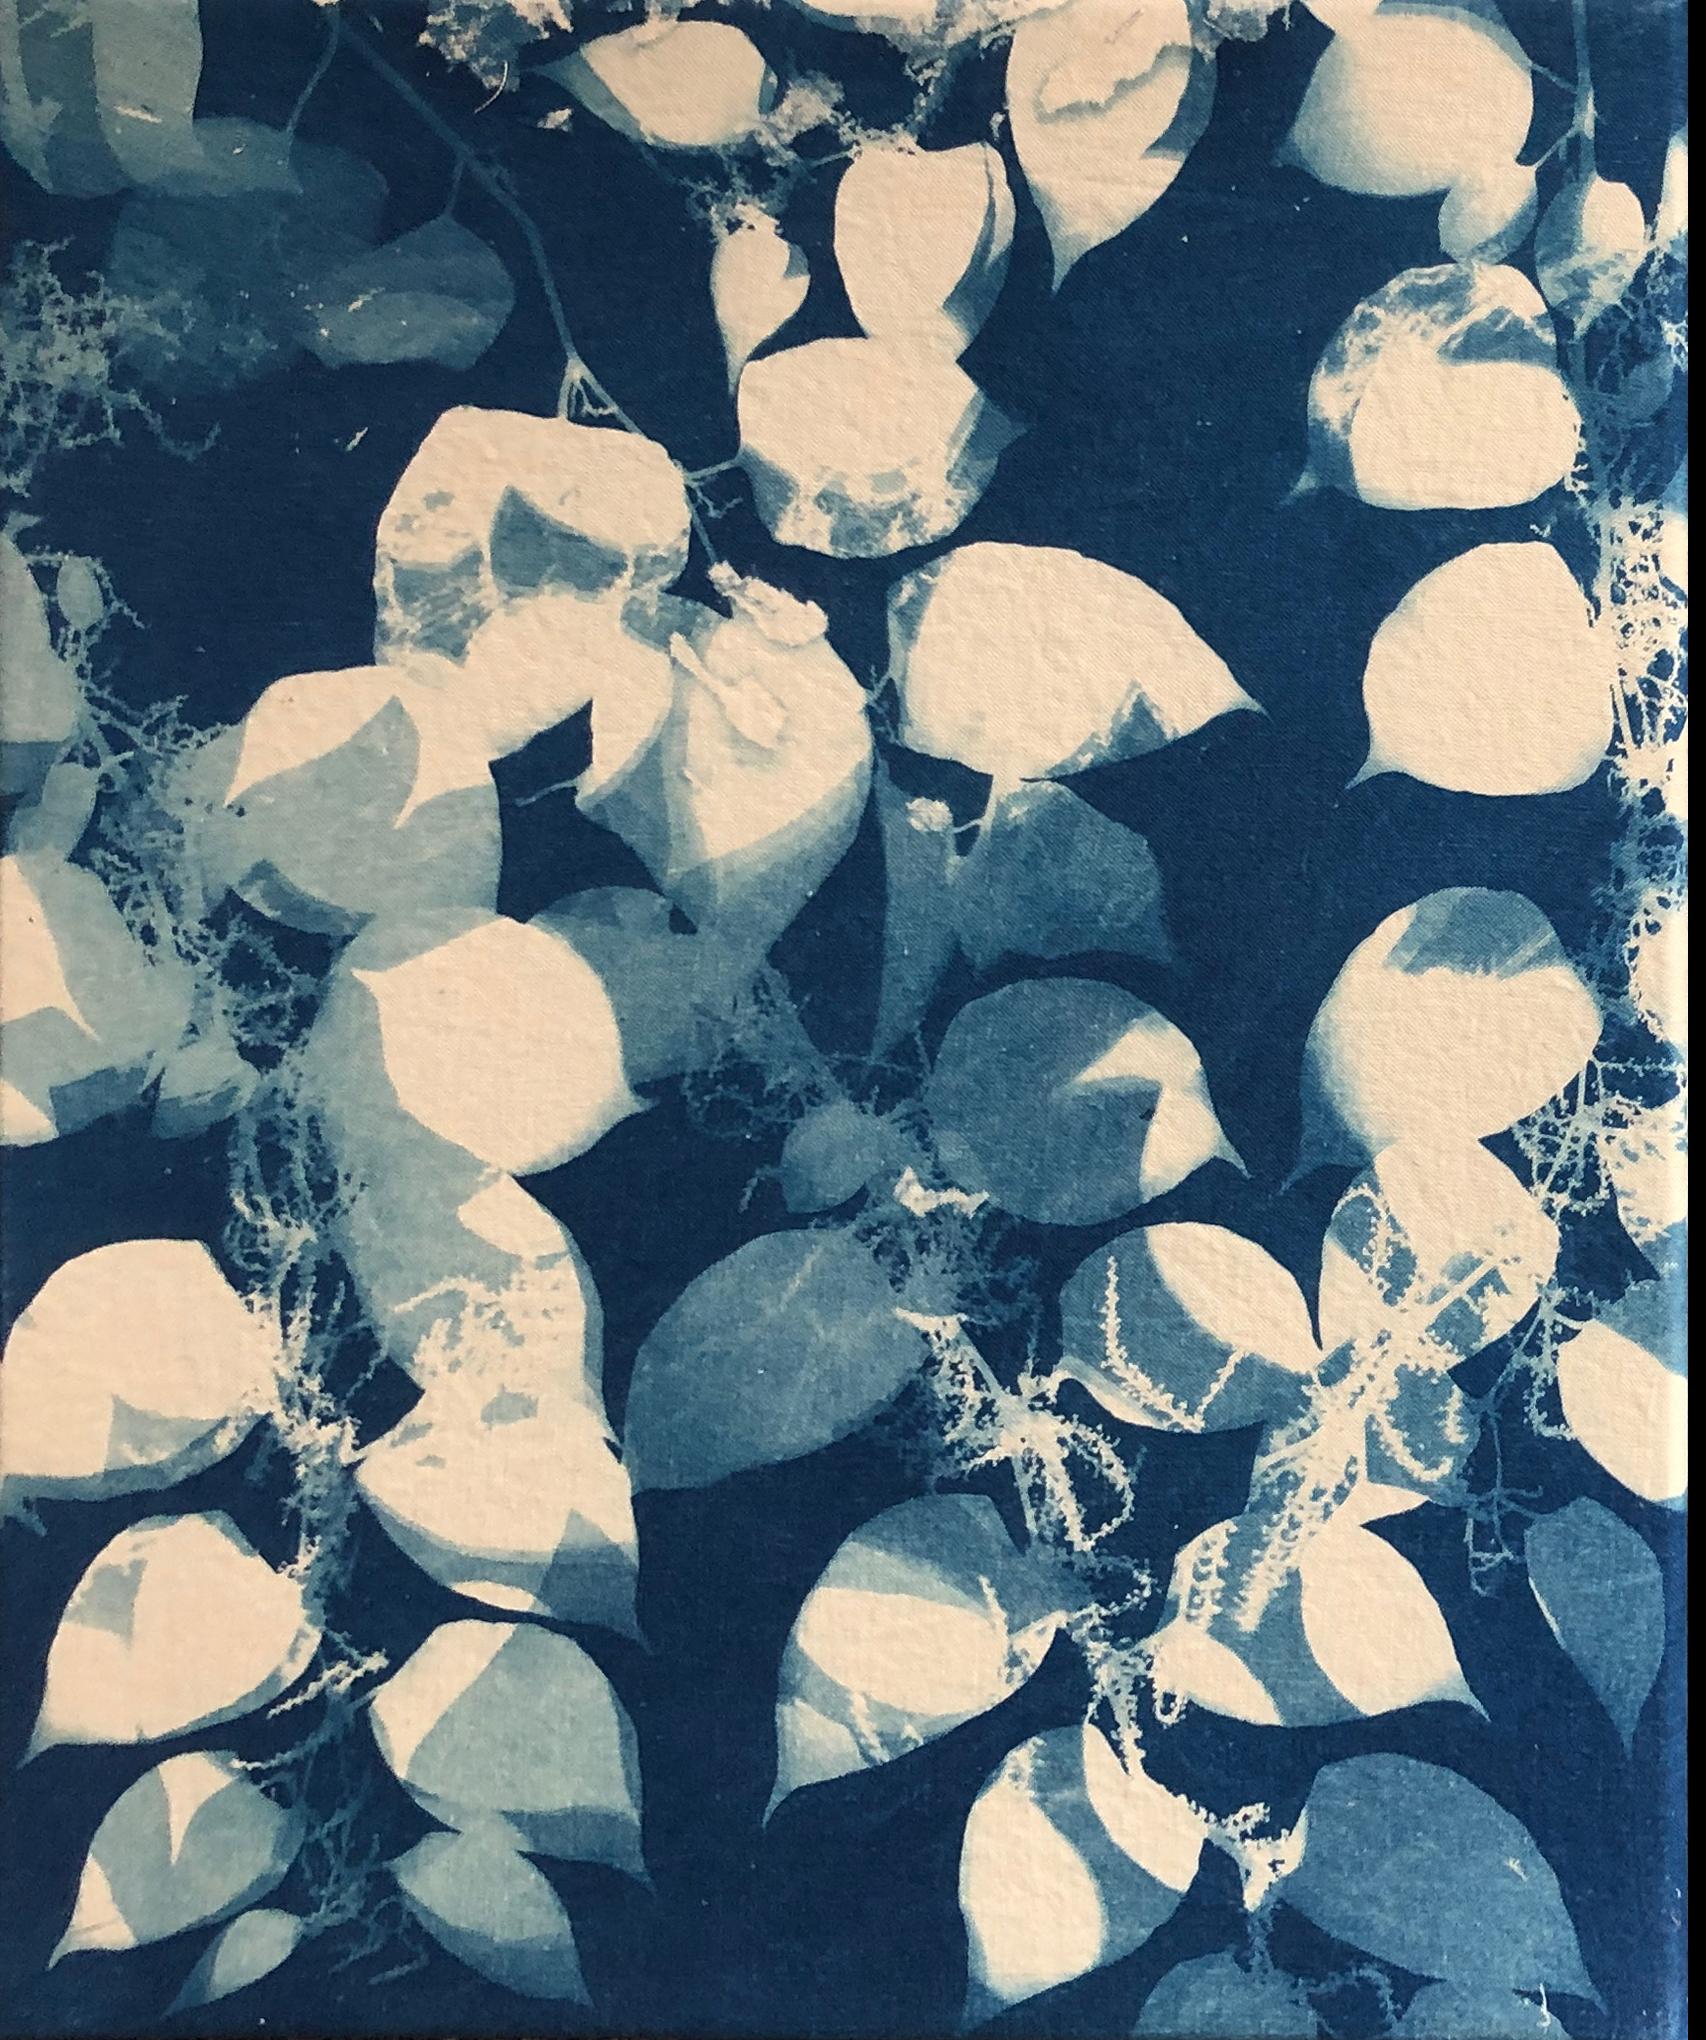 Abstract Photograph Marie Craig - "Renouée", contemporain, feuilles, branches, bleu, cyanotype, photographie.